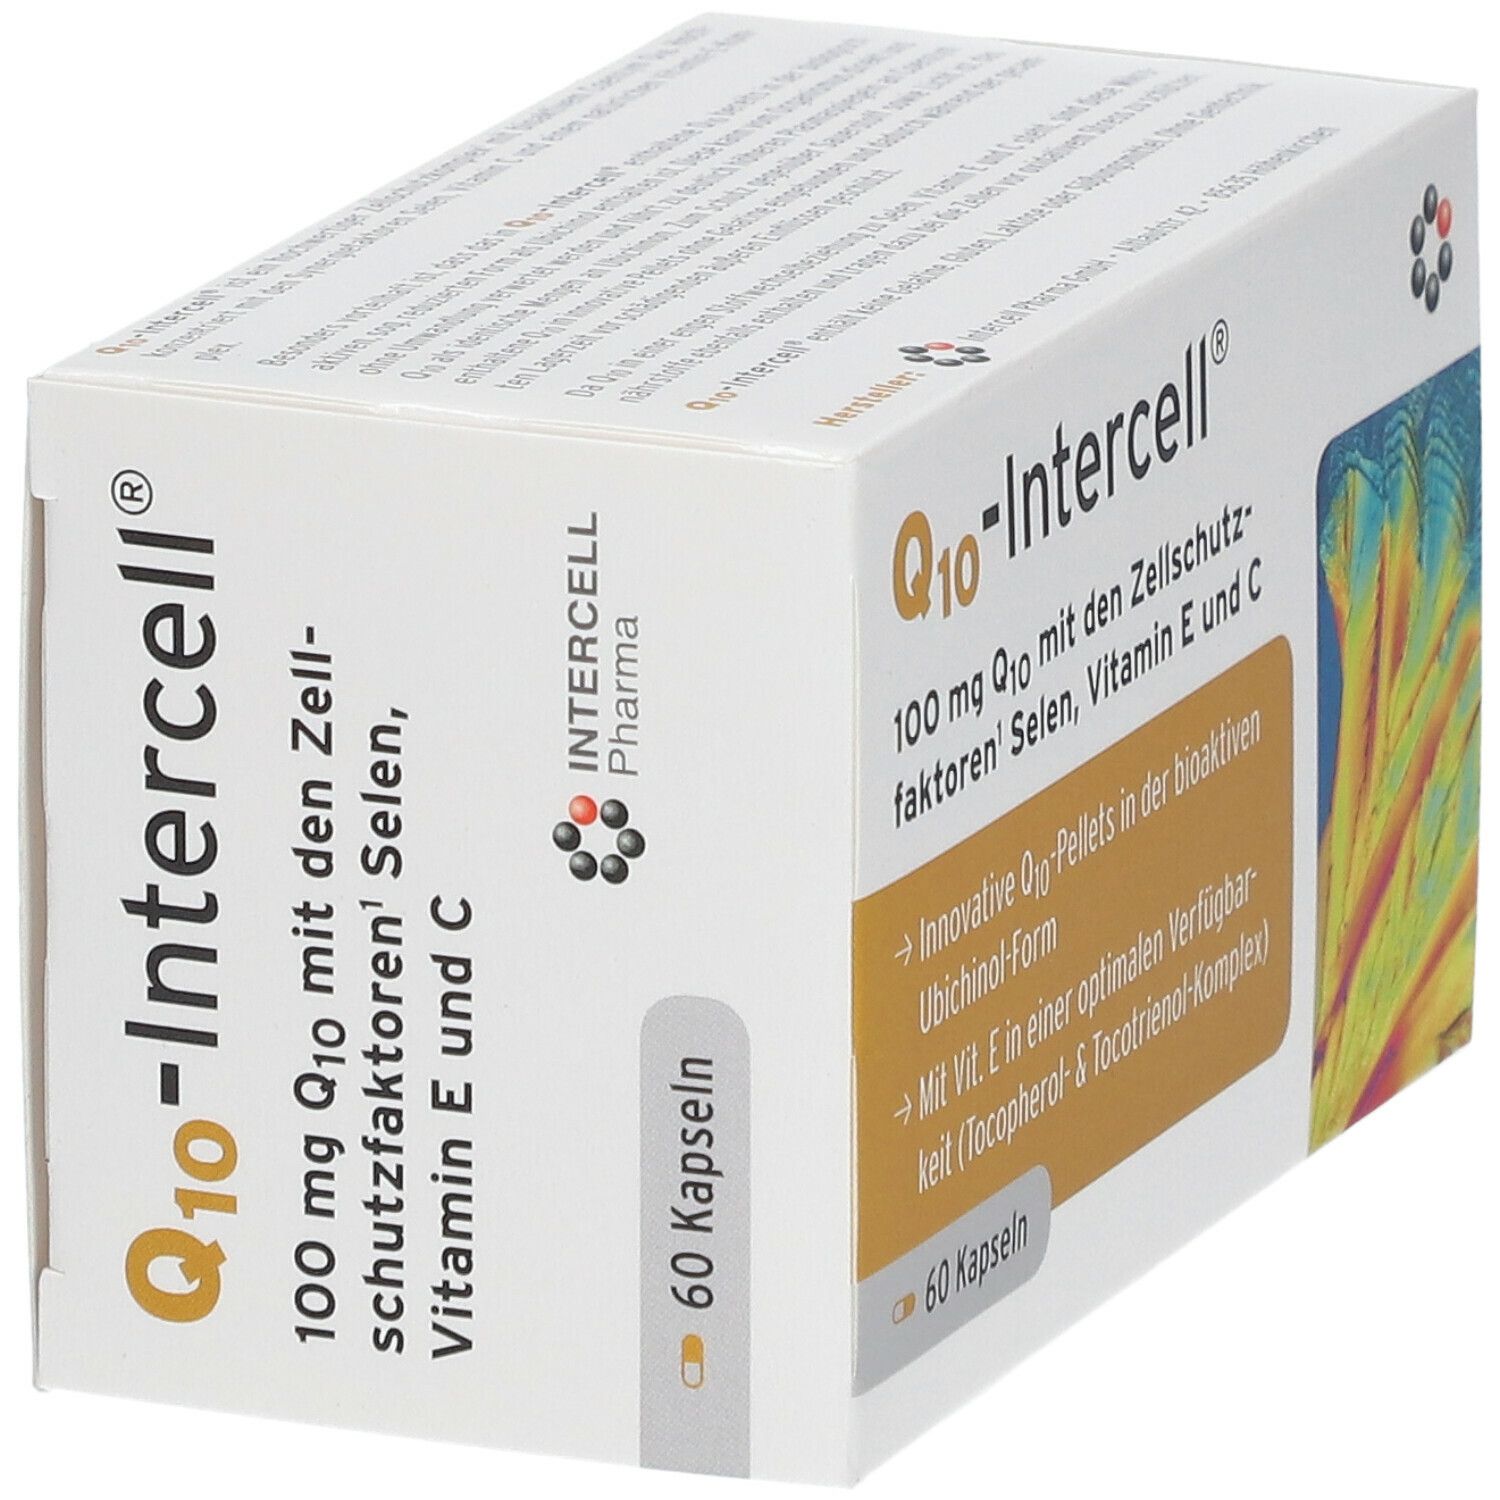 Q10- Intercell®